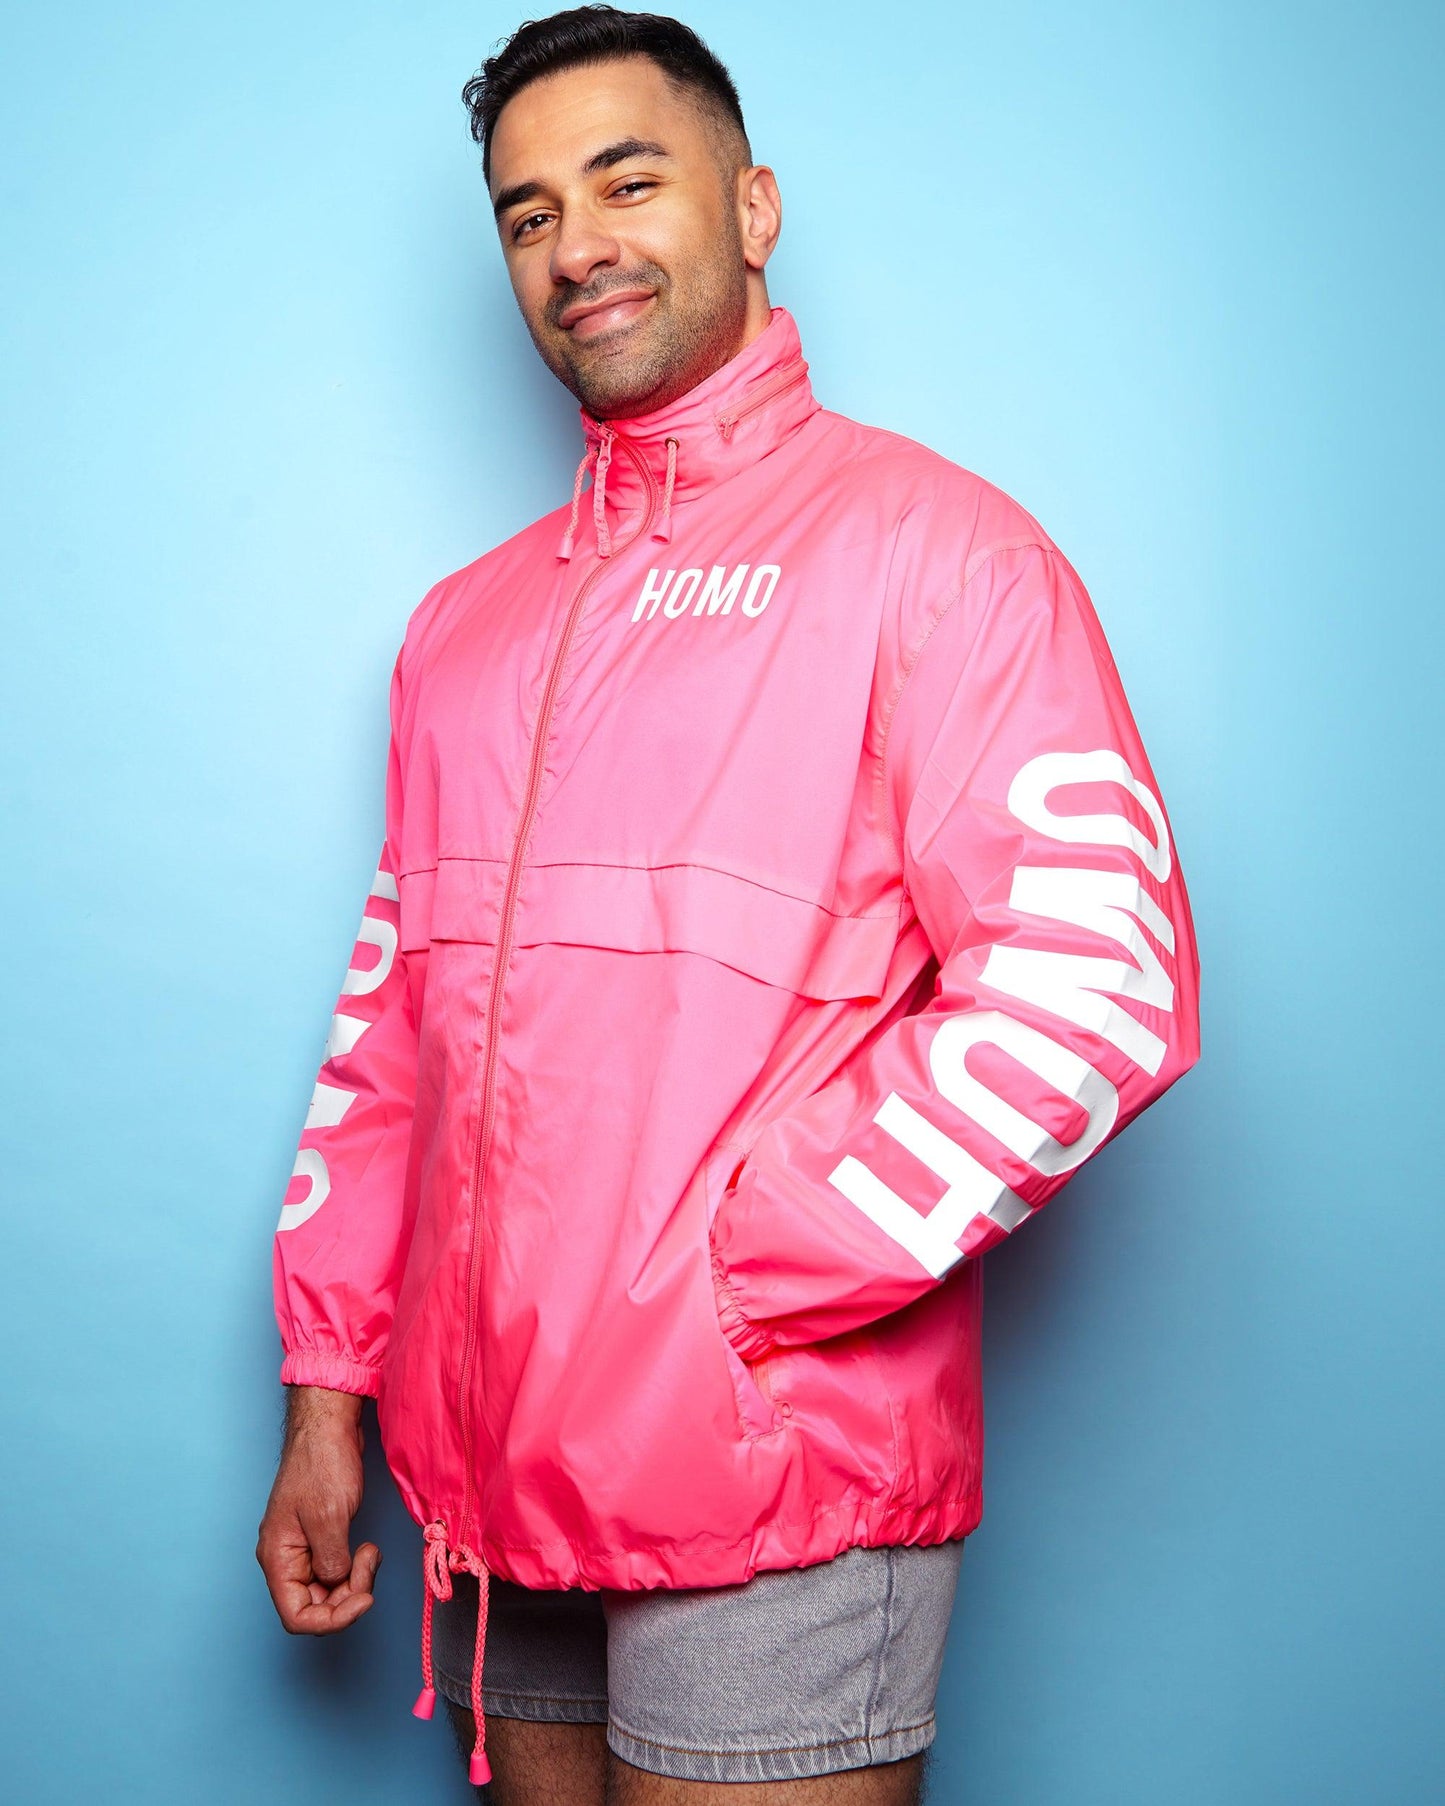 HOMO fluorescent pink - windbreaker jacket